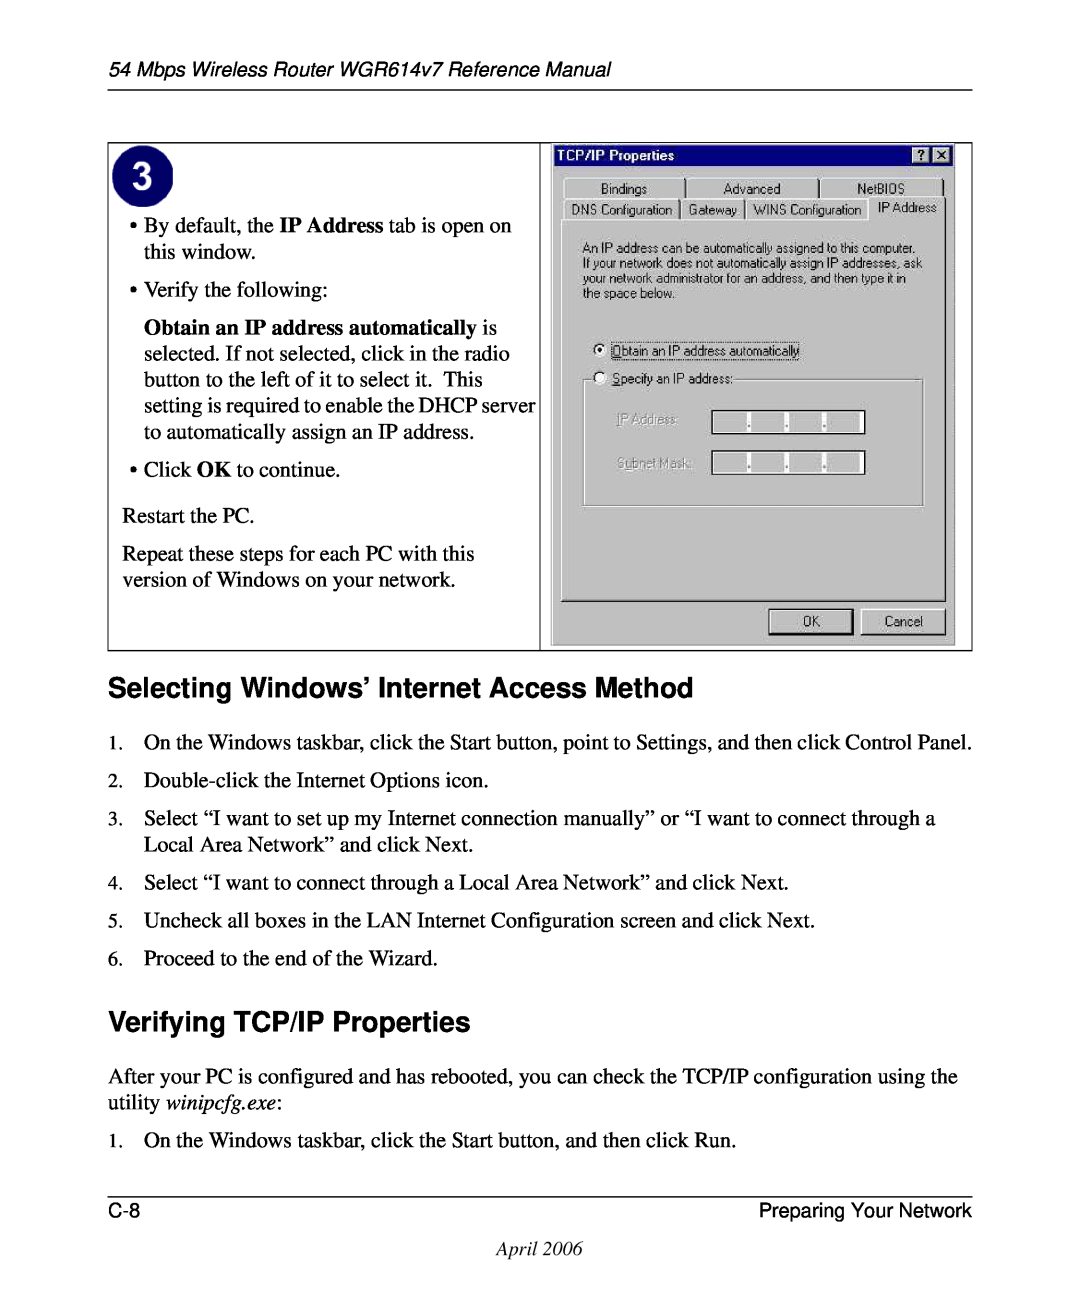 NETGEAR WGR614v7 manual Selecting Windows’ Internet Access Method, Verifying TCP/IP Properties 